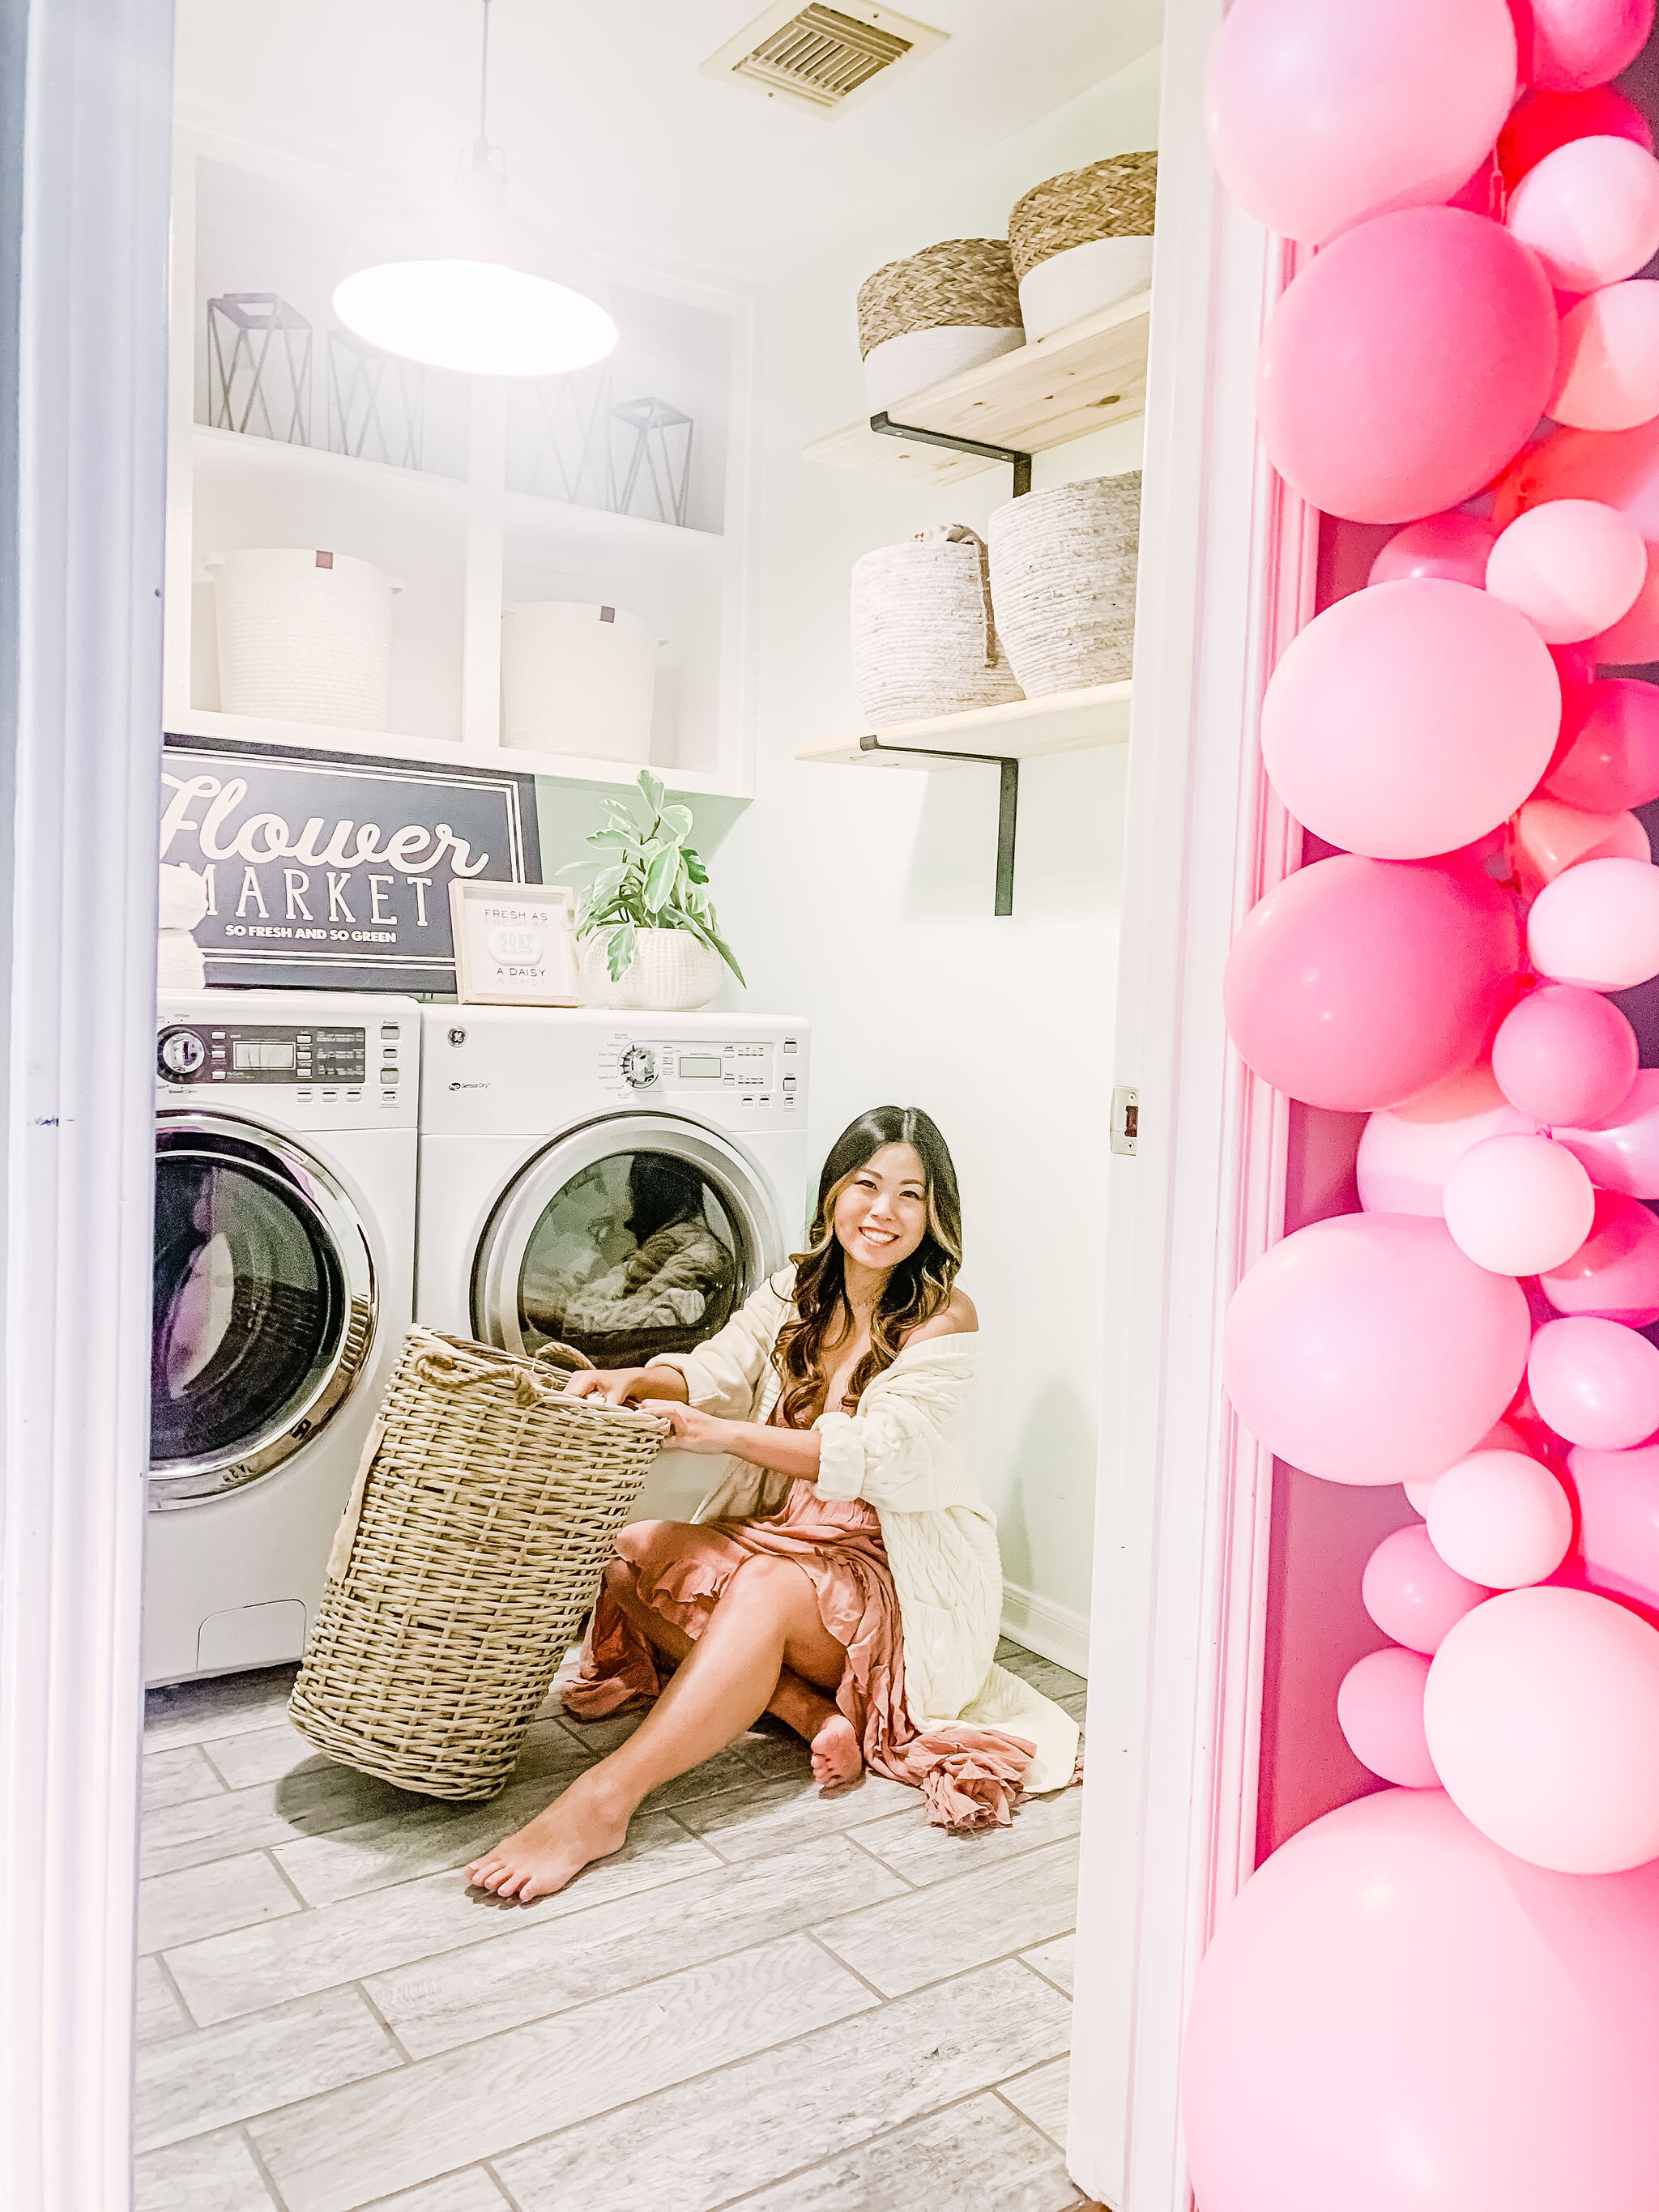 Laundry Room Makeover on a Budget plus DIY Storage Shelves